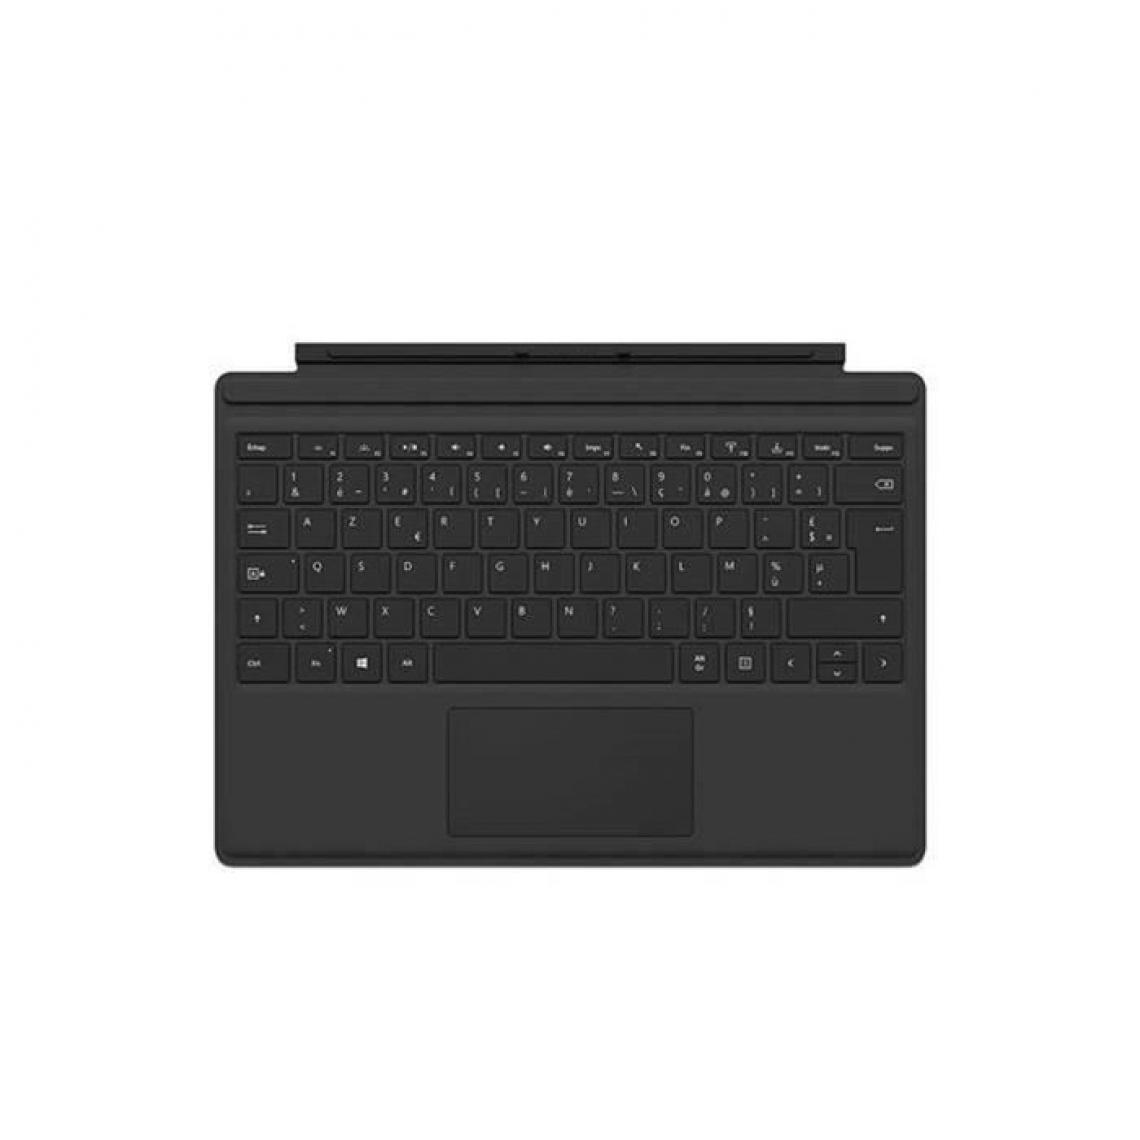 Microsoft - Etui avec clavier bluetooth FMM-00004 - Clavier